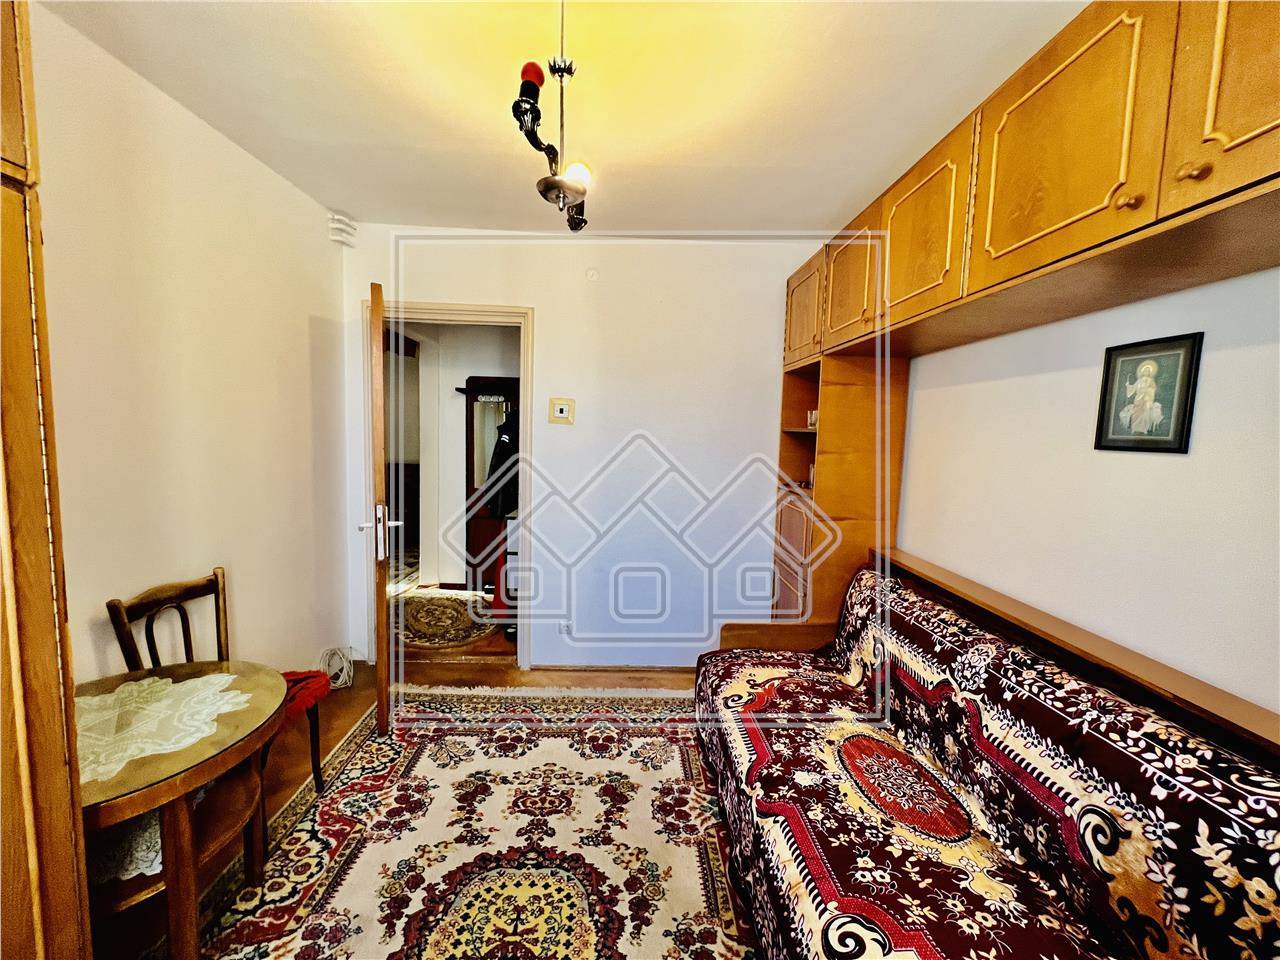 Apartment for sale in Sibiu - 3 rooms detached - Mihai Viteazu